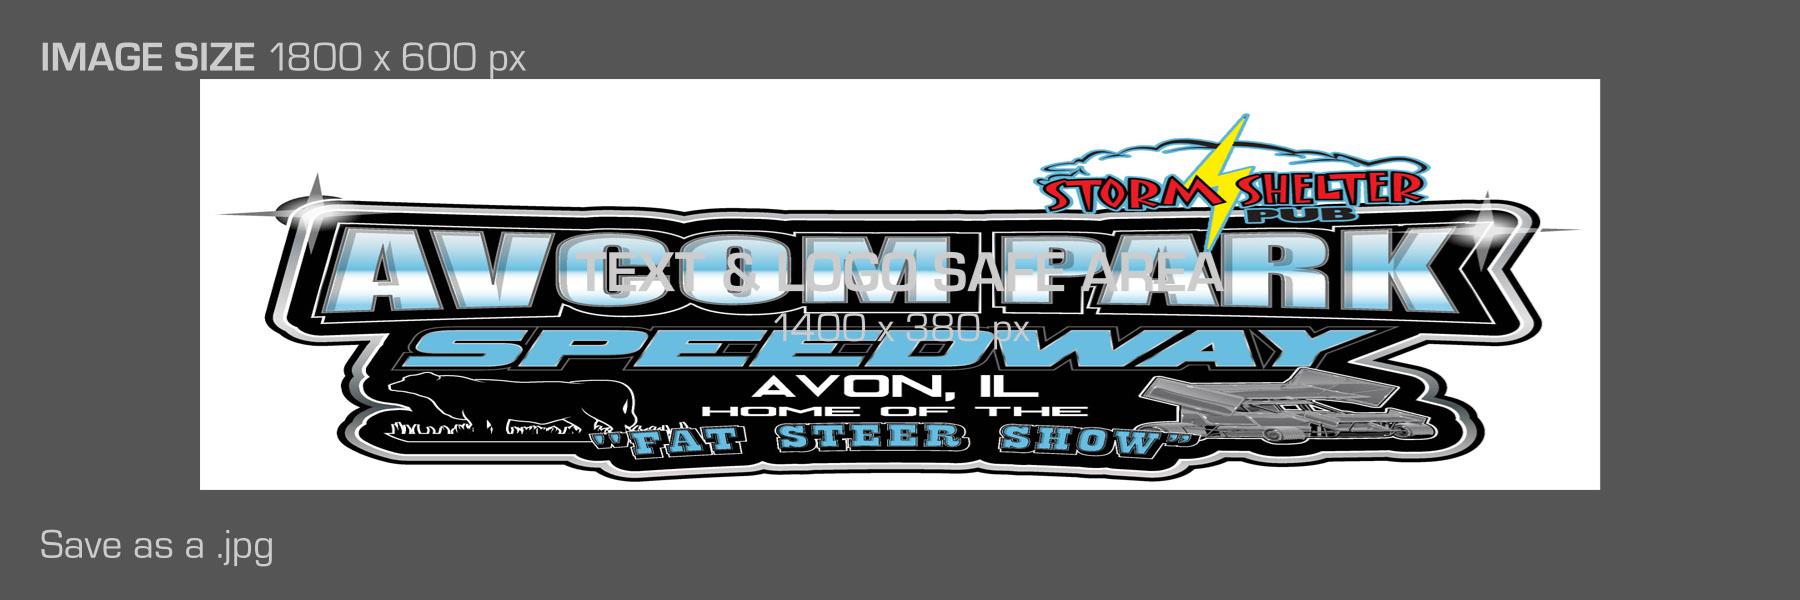 9/12/2021 - Avcom Park Speedway